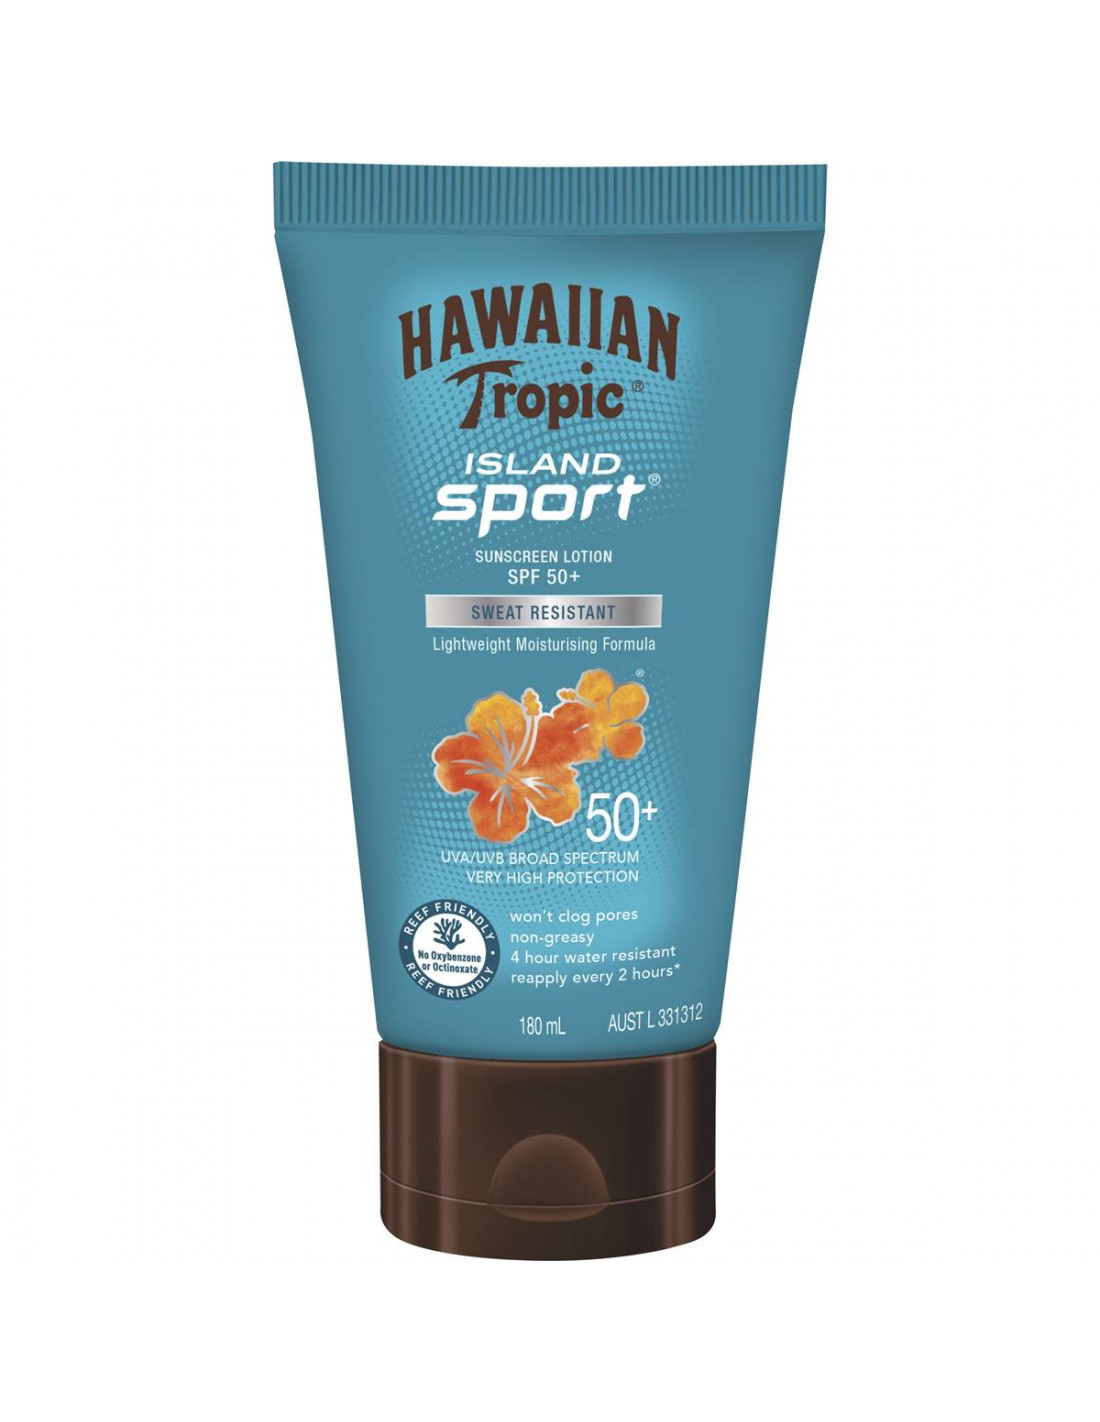 Hawaiian Tropic Island Sport Sunscreen Lotion Spf 50+ Sweat Resista